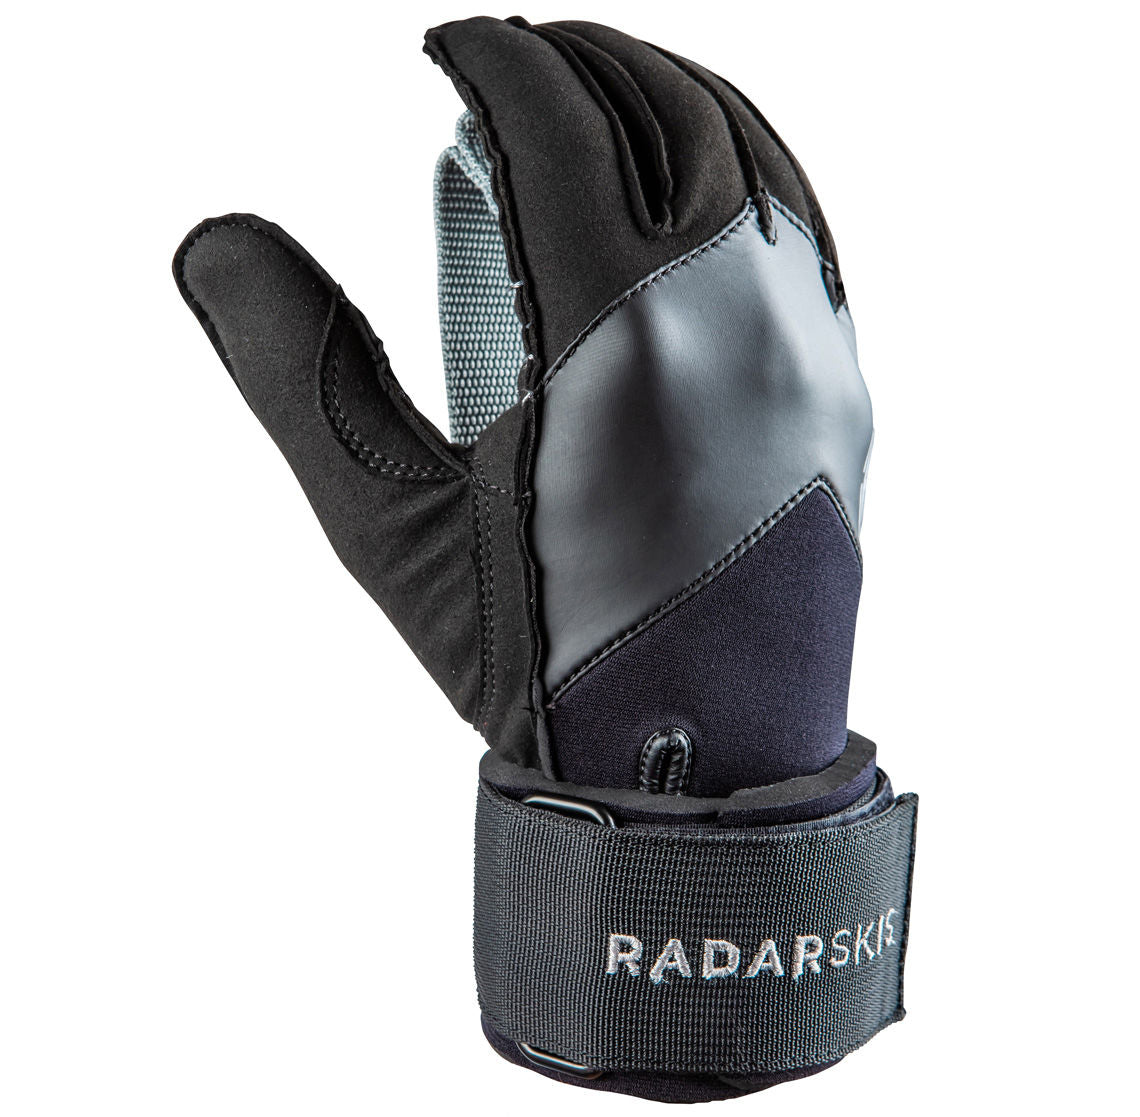 Radar Men's Vice Inside-Out Ski Gloves